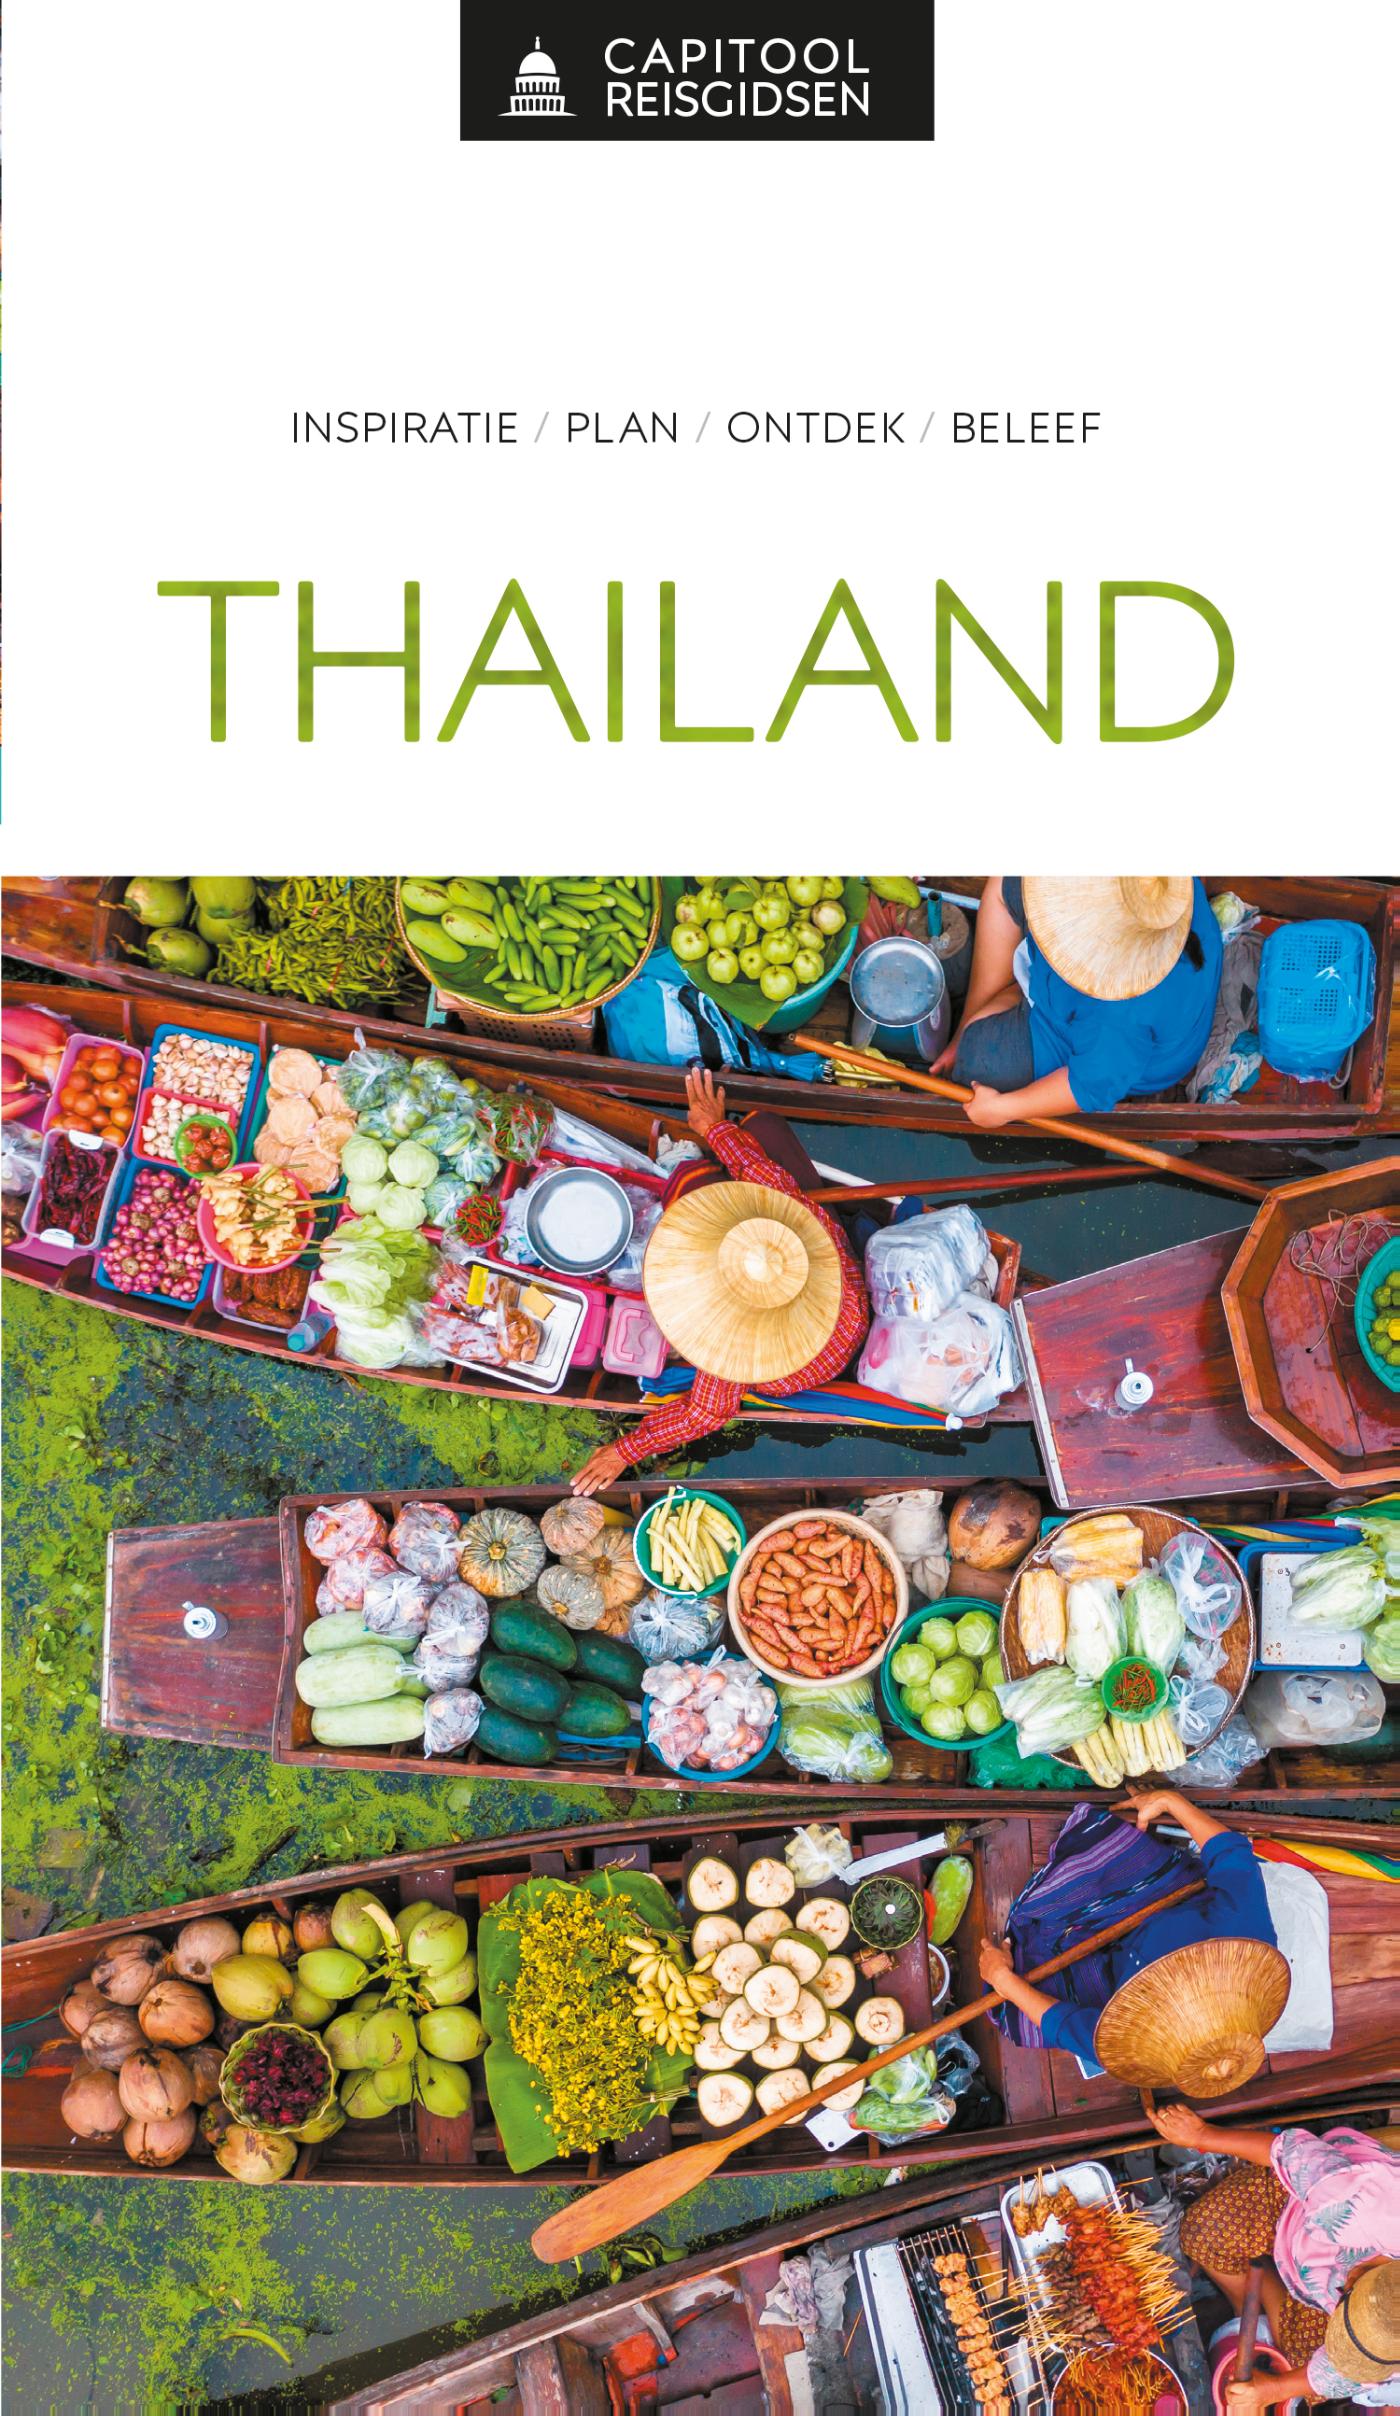 Online bestellen: Reisgids Capitool Reisgidsen Thailand | Unieboek